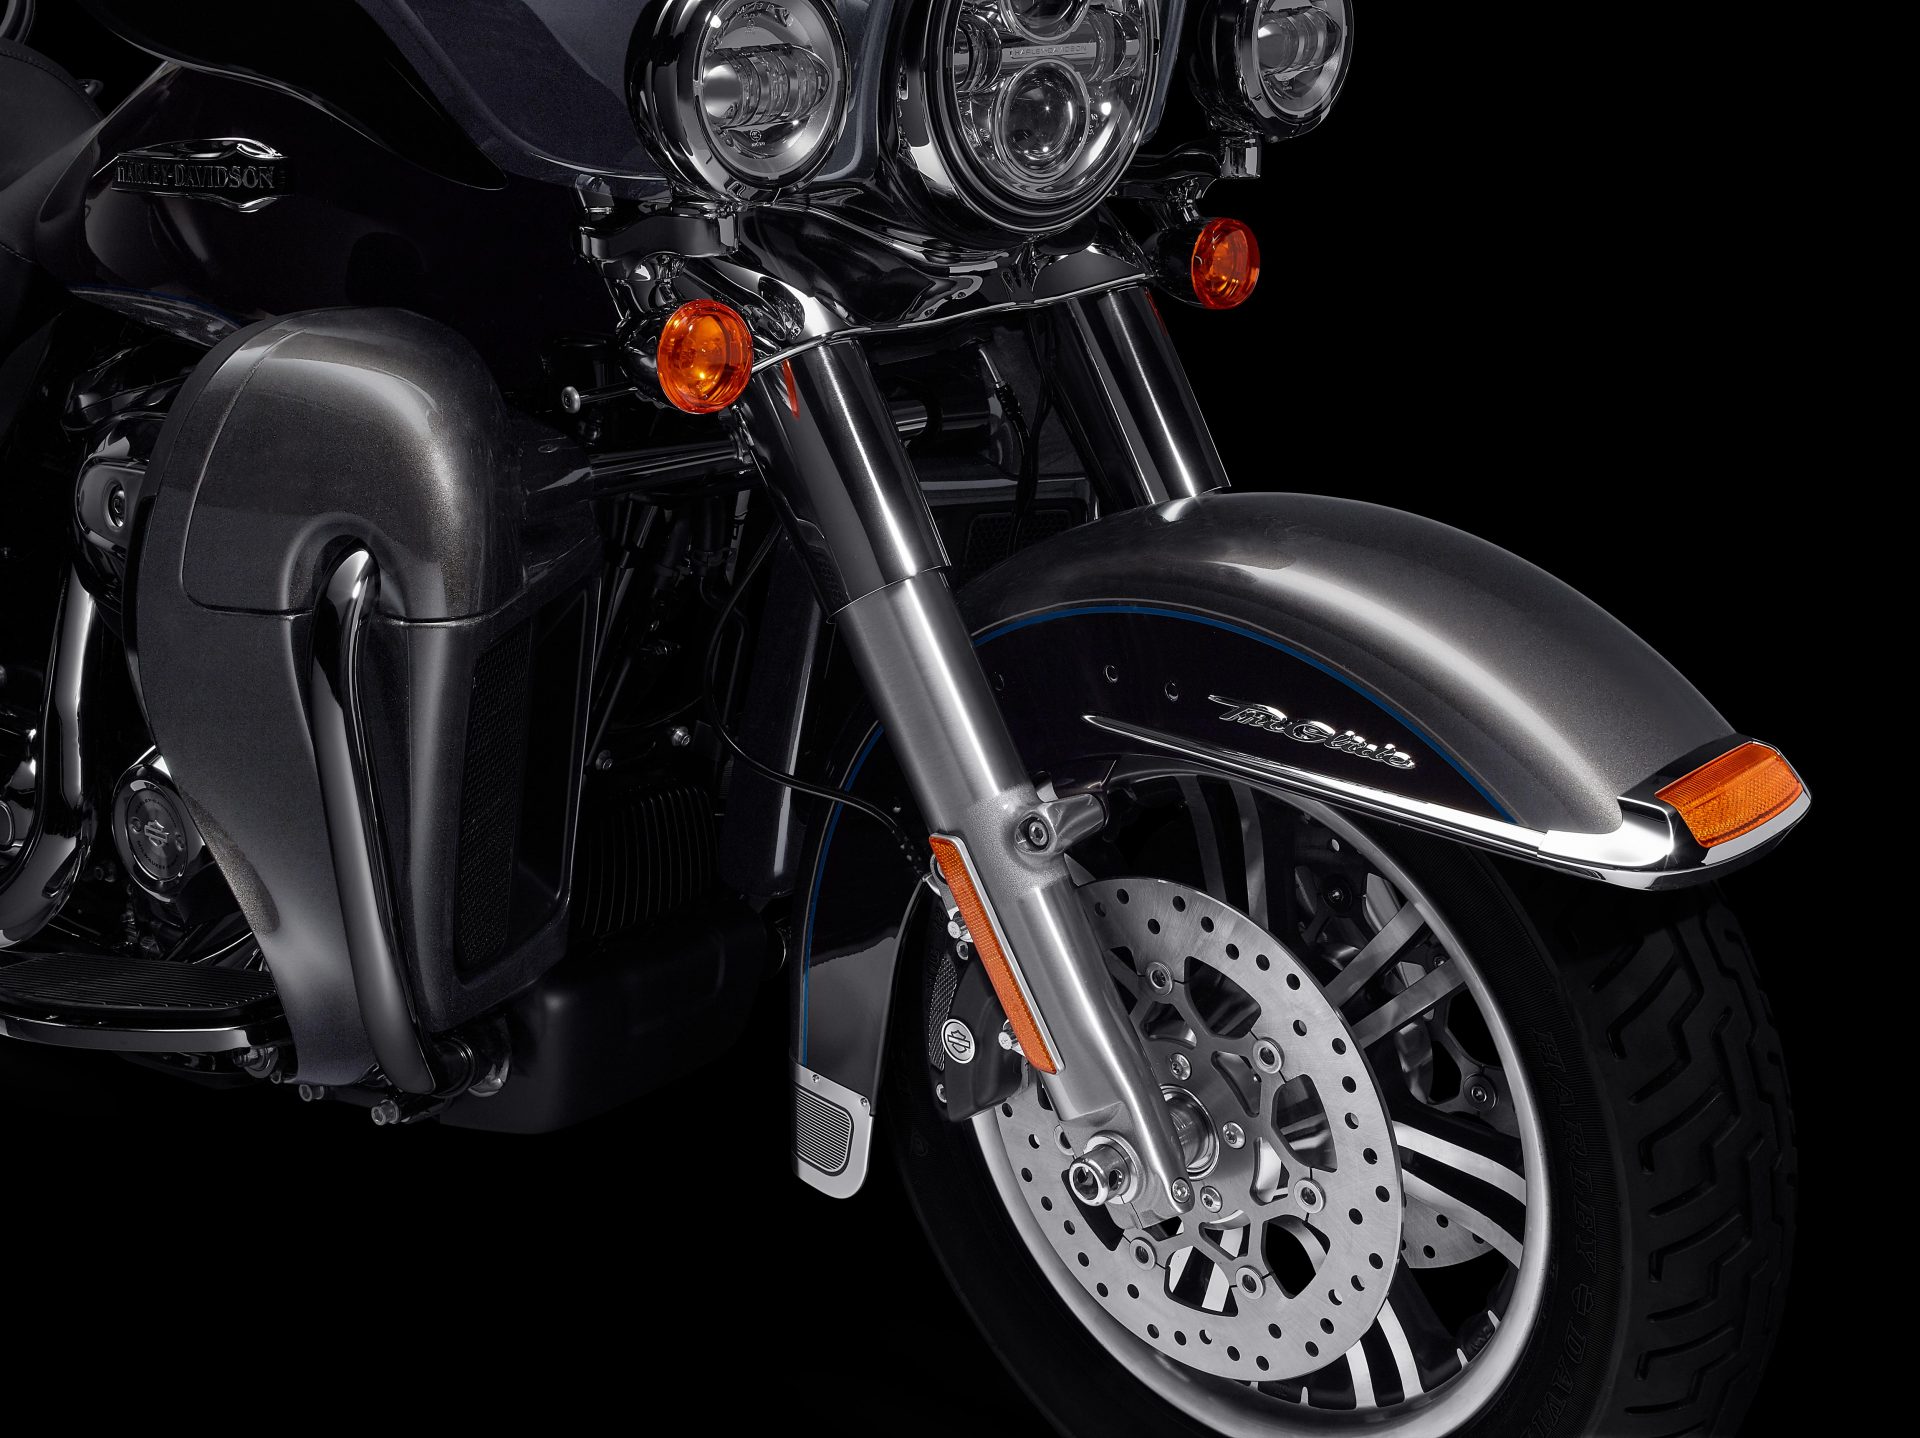 Harley-Davidson P&A 2014 - Part 1 by Thunderbike - Issuu